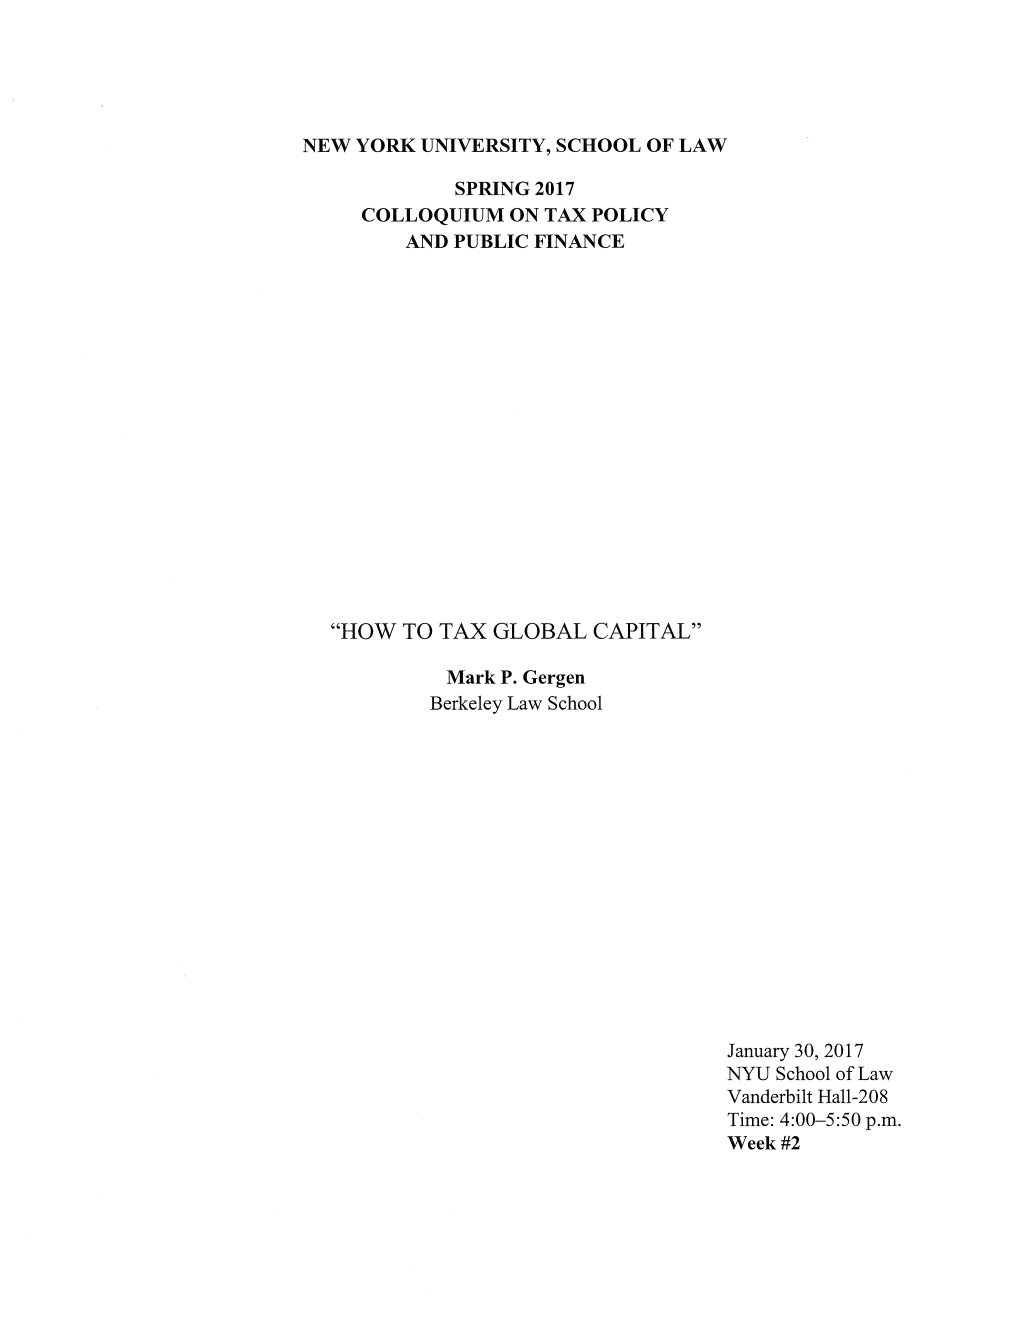 "How to Tax Global Capital"